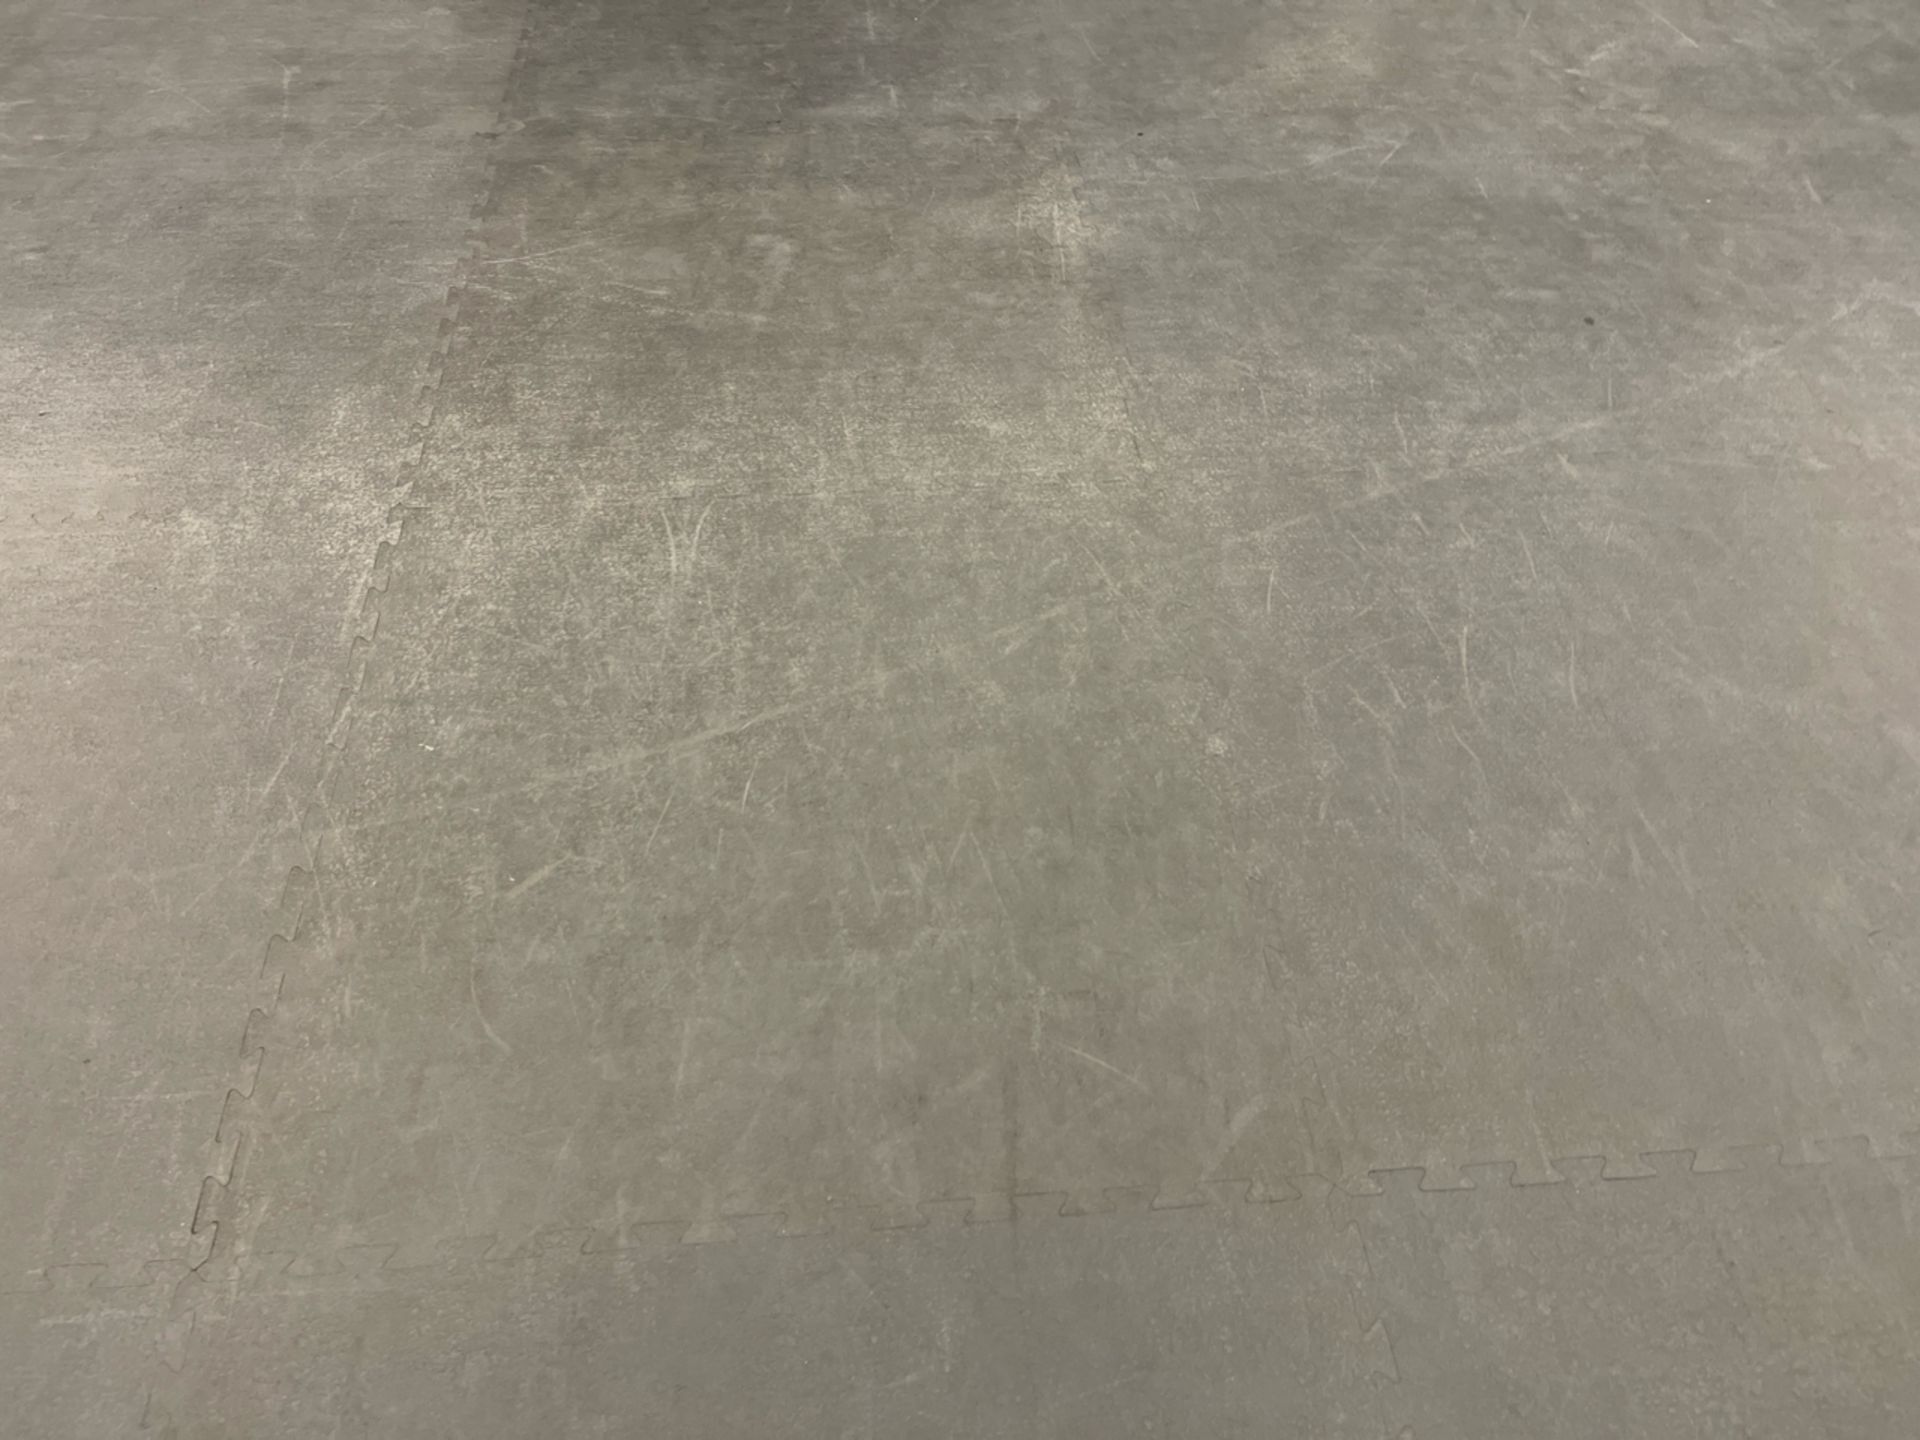 Approximately 260 Grey Interlocking Gym Floor Tiles - Image 2 of 5